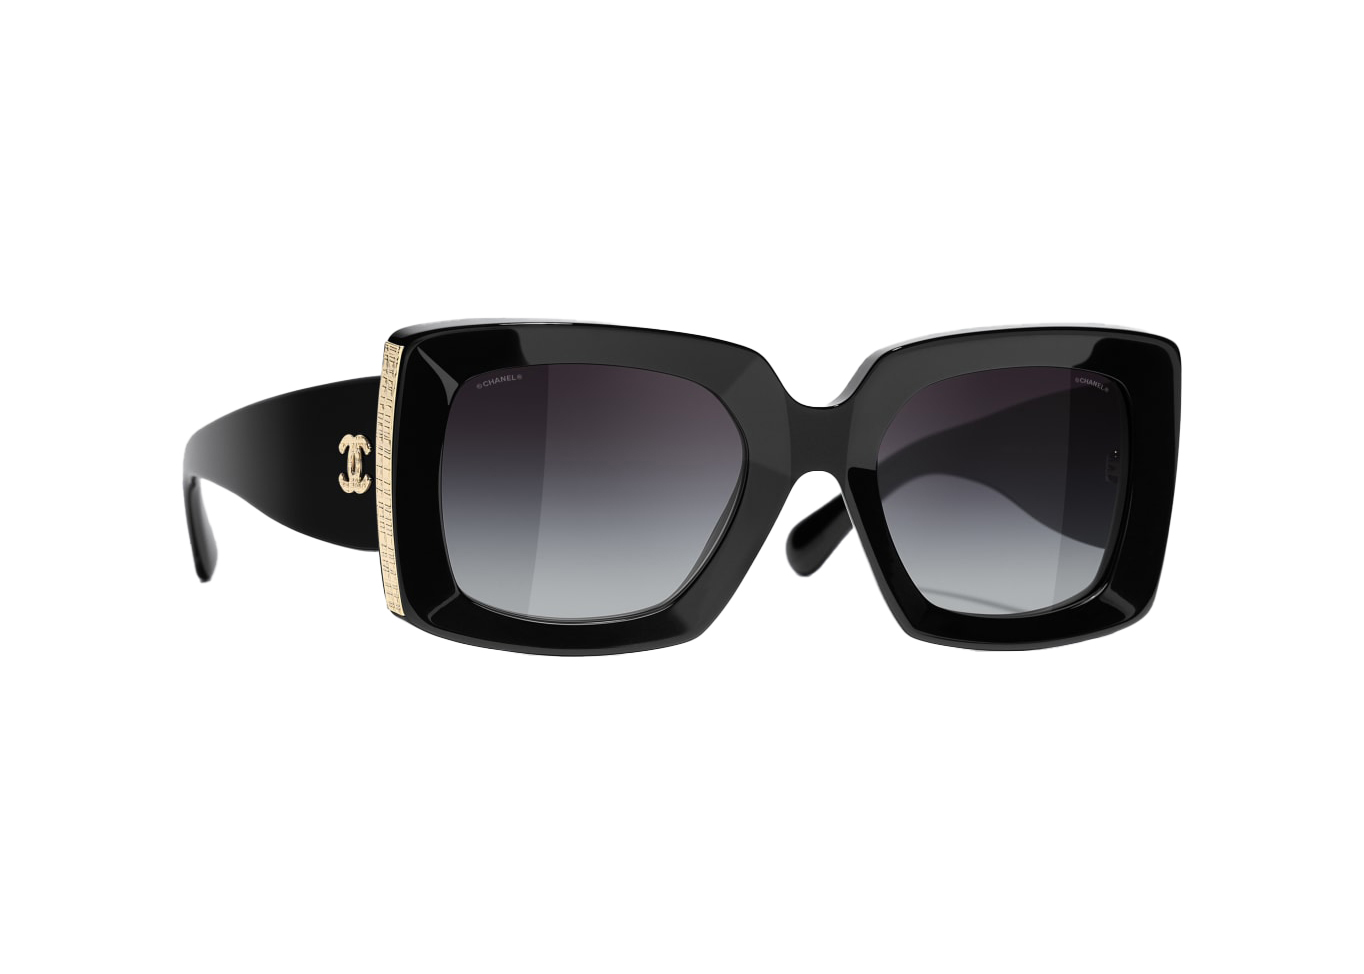 Chanel Rectangle Sunglasses Black (5483 C760/S6) in Acetate - US